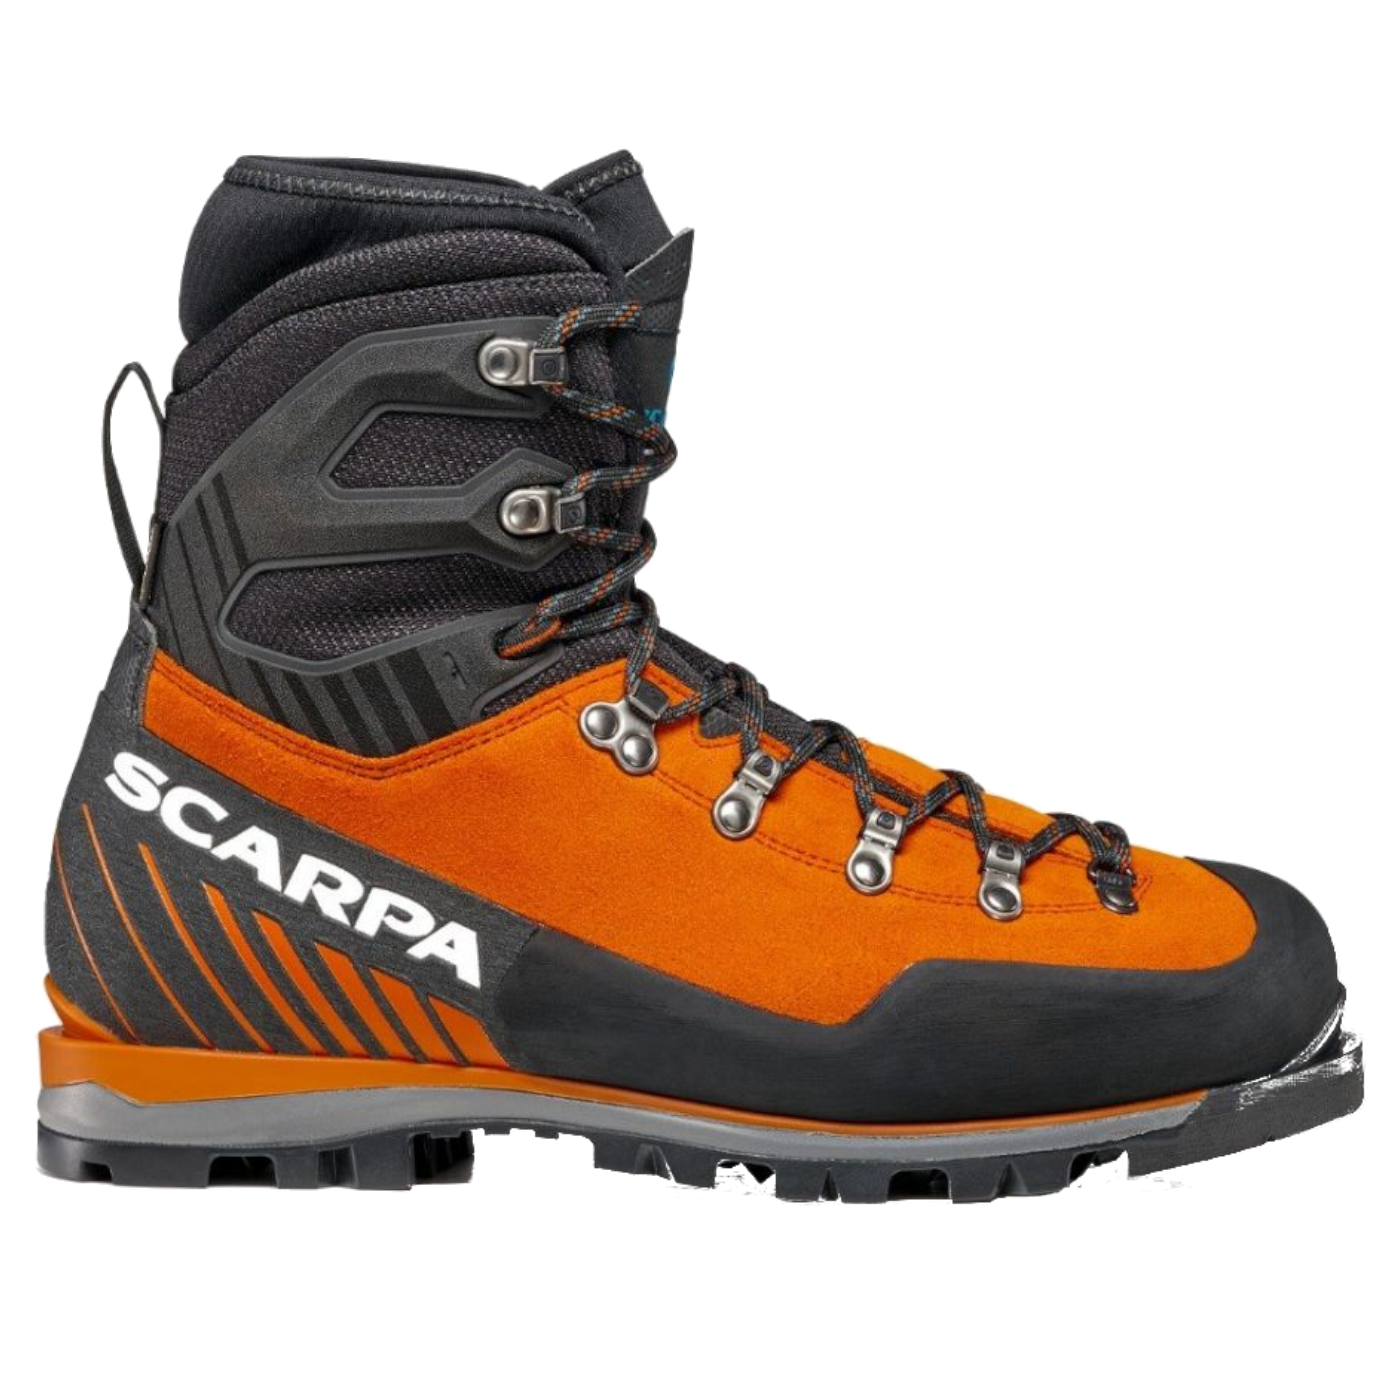 Scarpa Mont Blanc Pro GTX Size 43 Mountaineering Boot